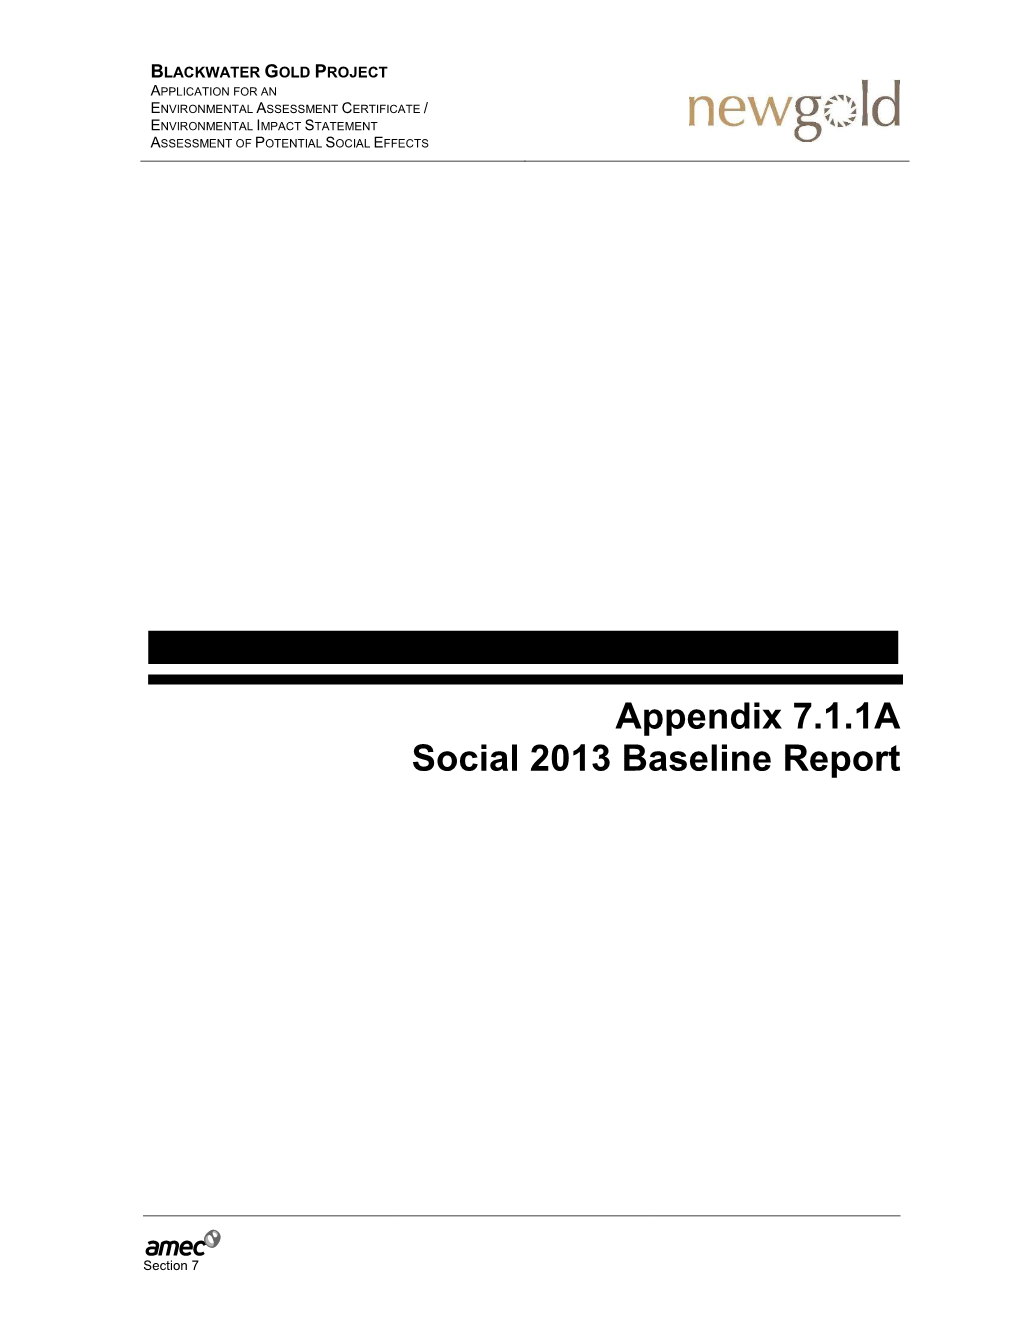 Appendix 7.1.1A Social 2013 Baseline Report